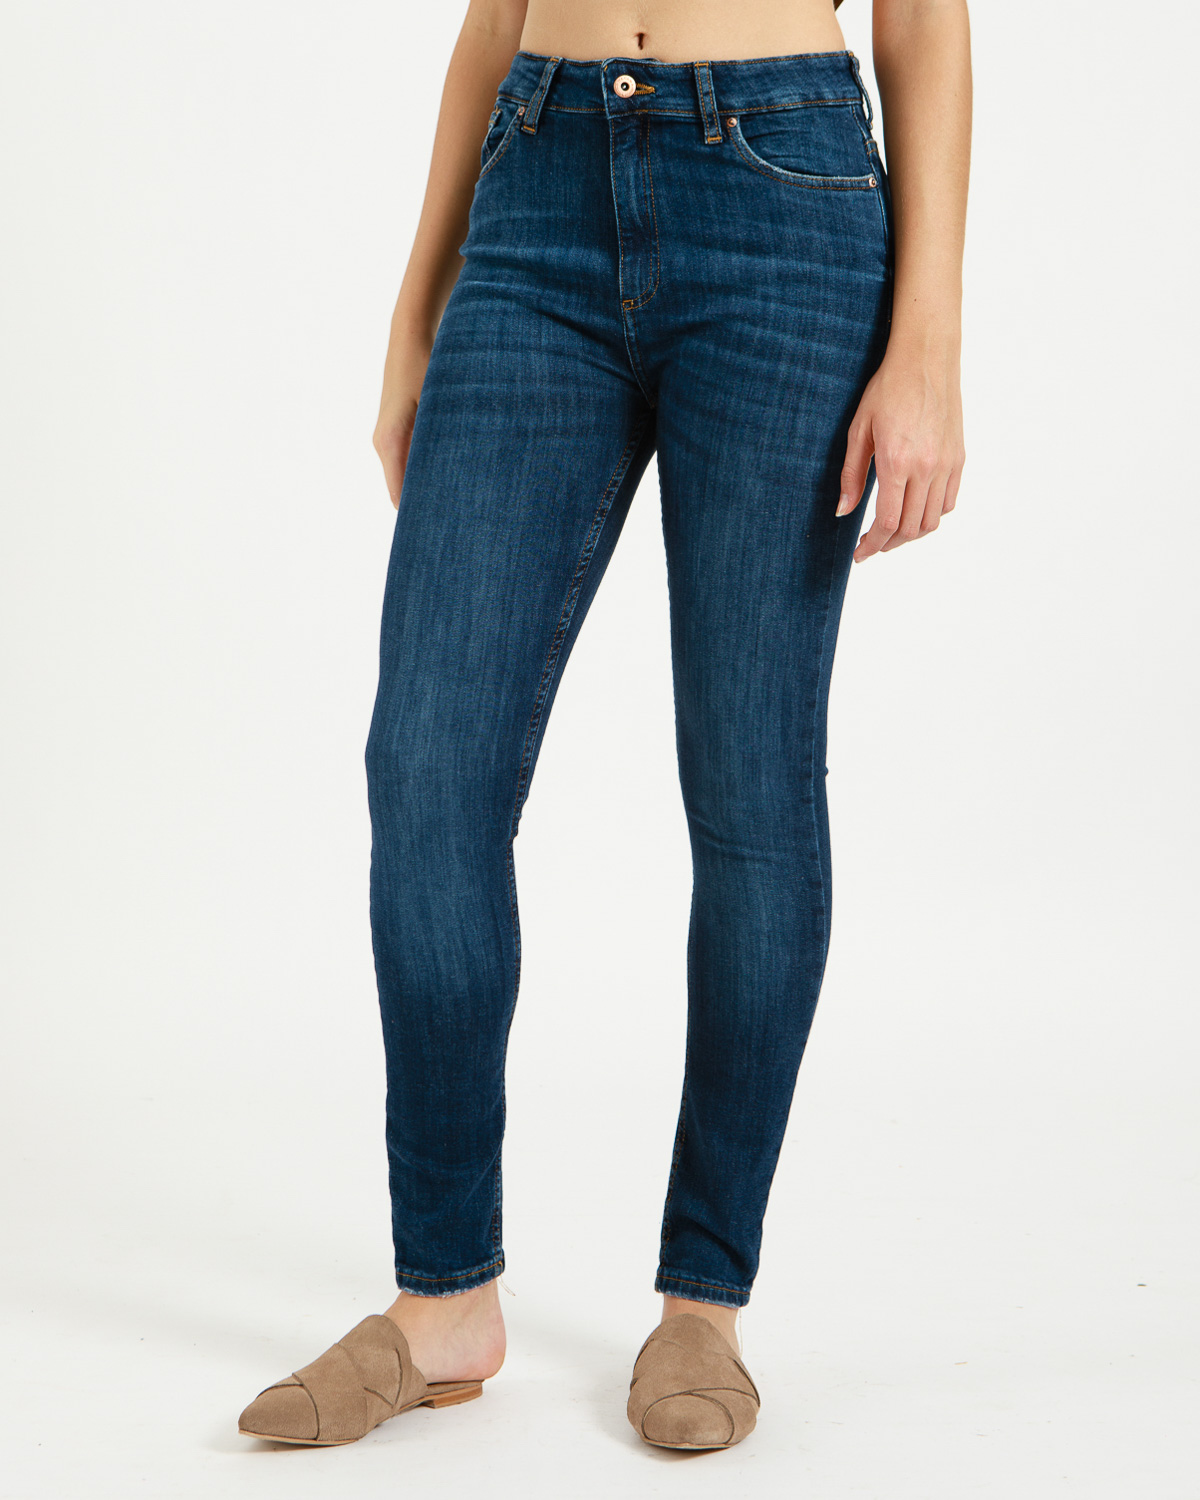 Kaia Taylor Blue Jeans 